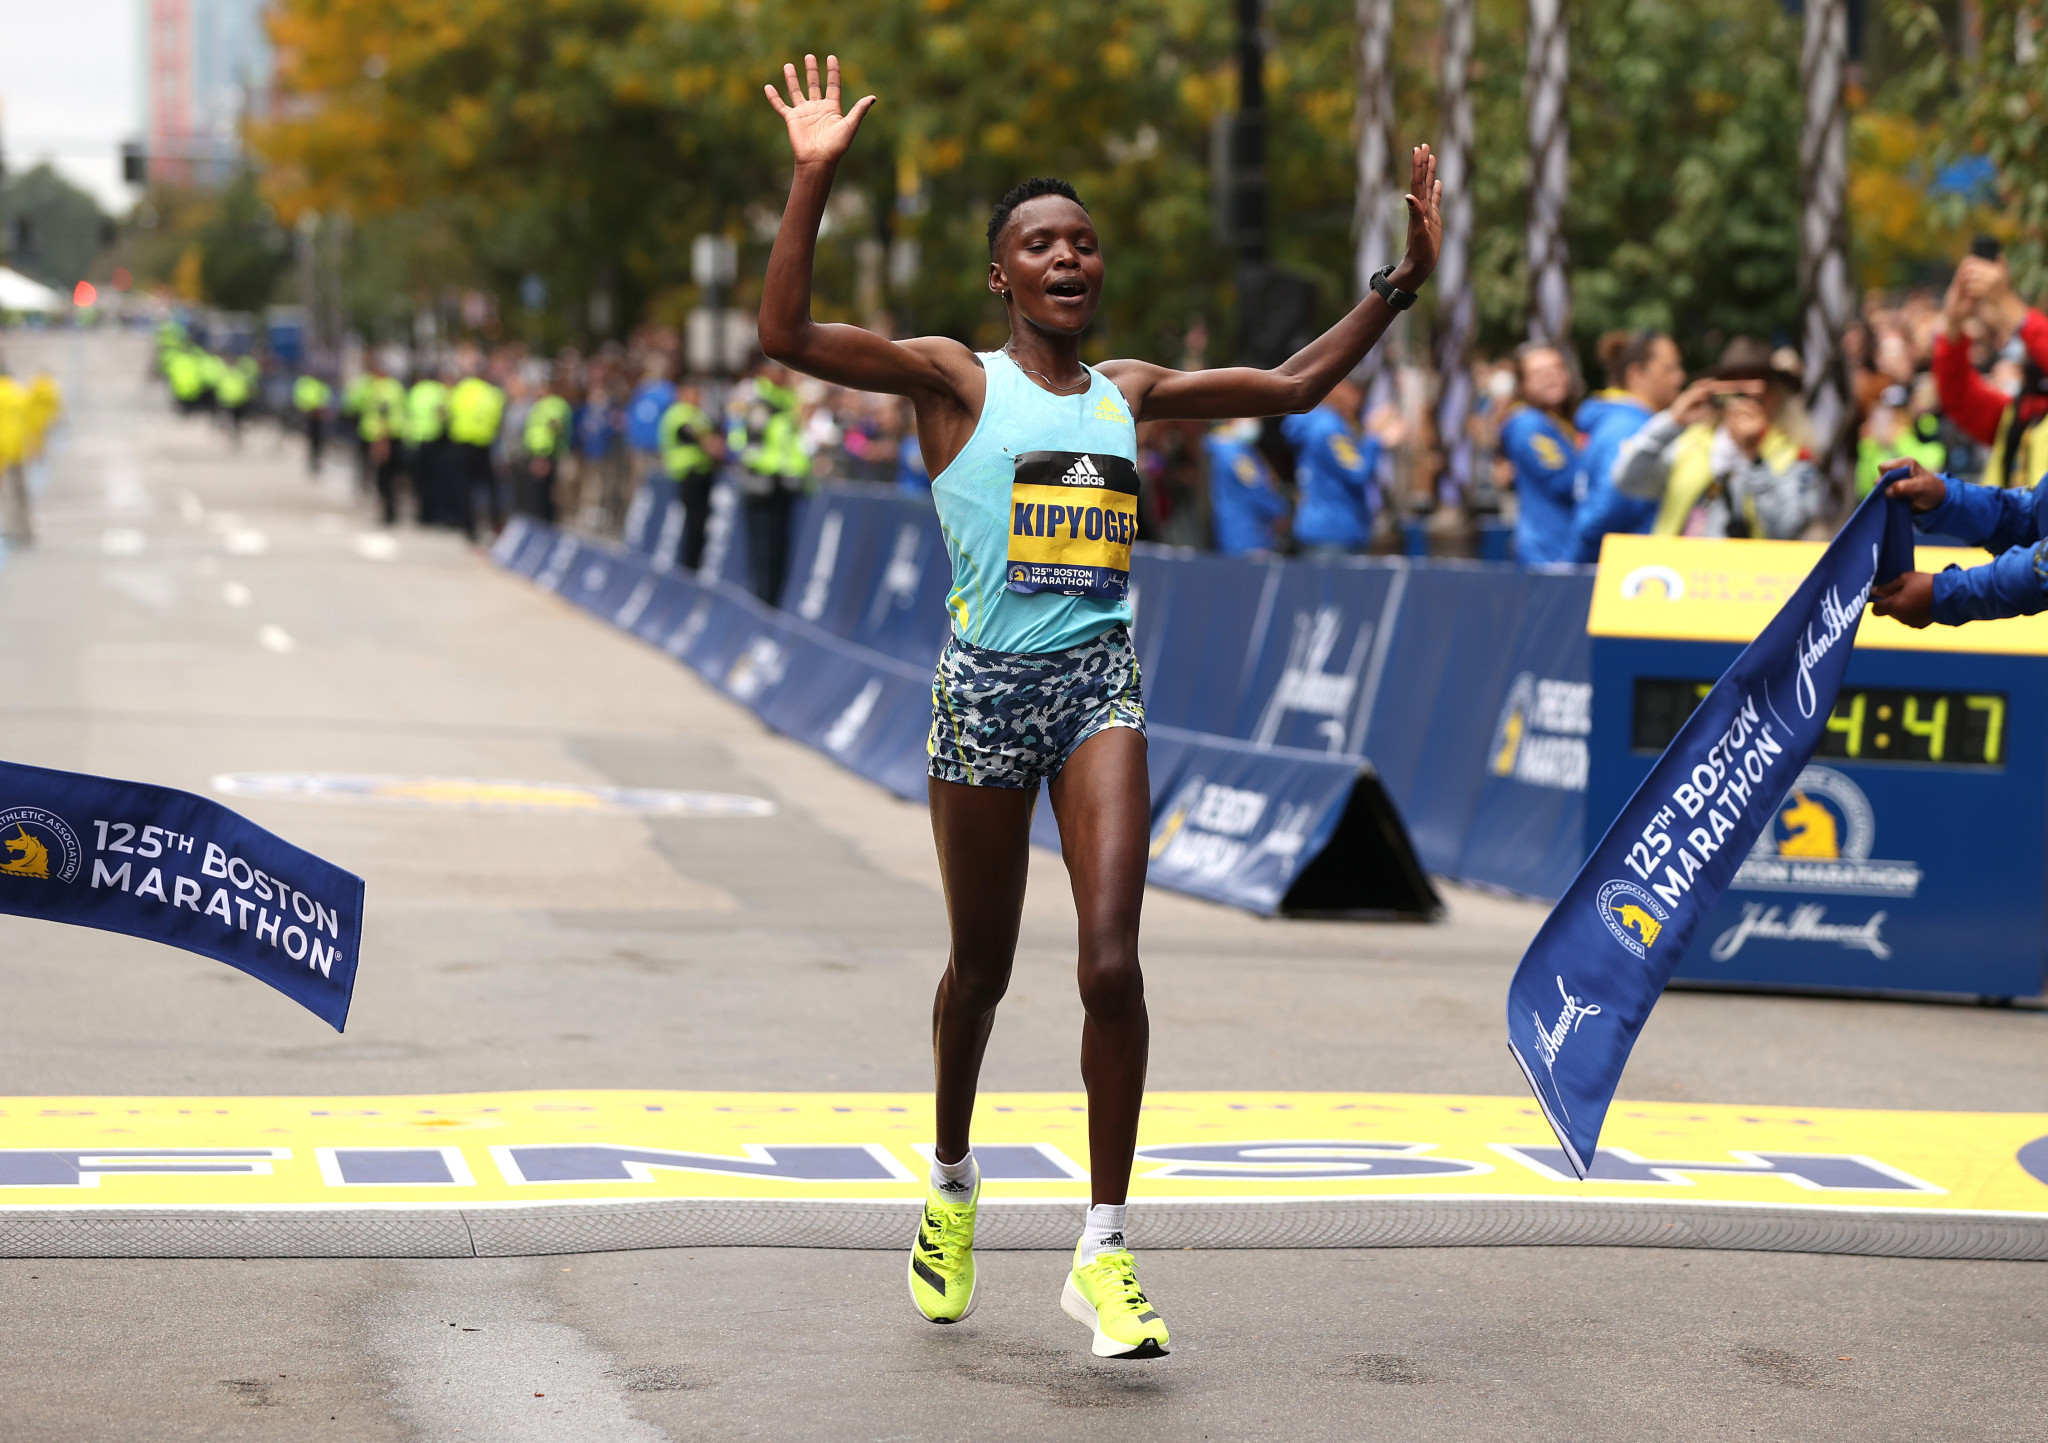 Boston Marathon winner Kipyokei provisionally suspended by Athletics Integrity Unit